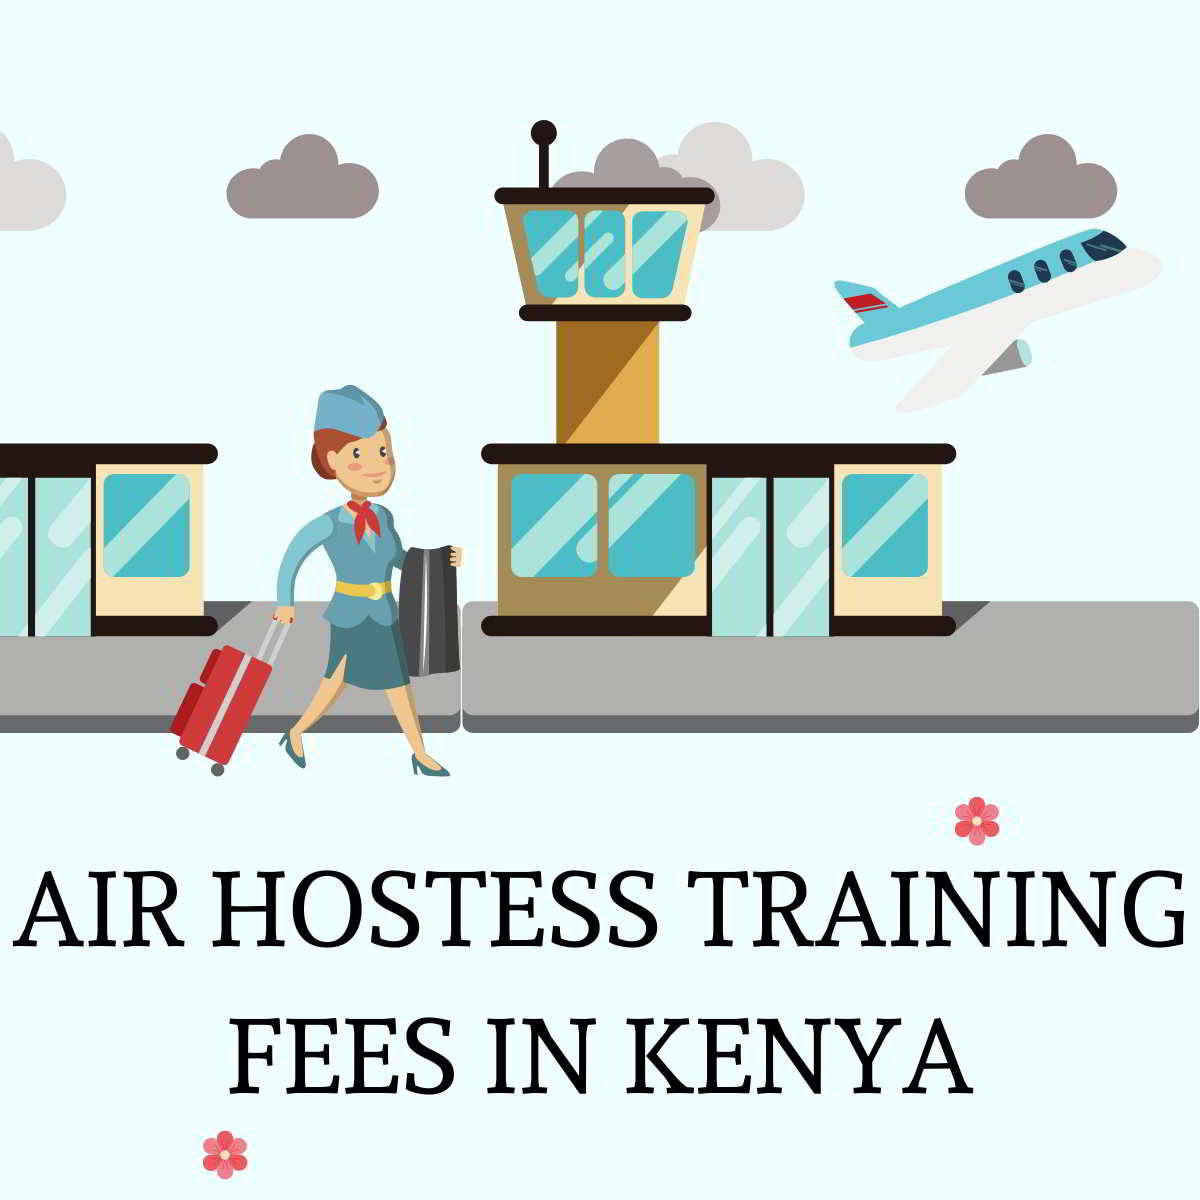 Air hostess training fees in Kenya